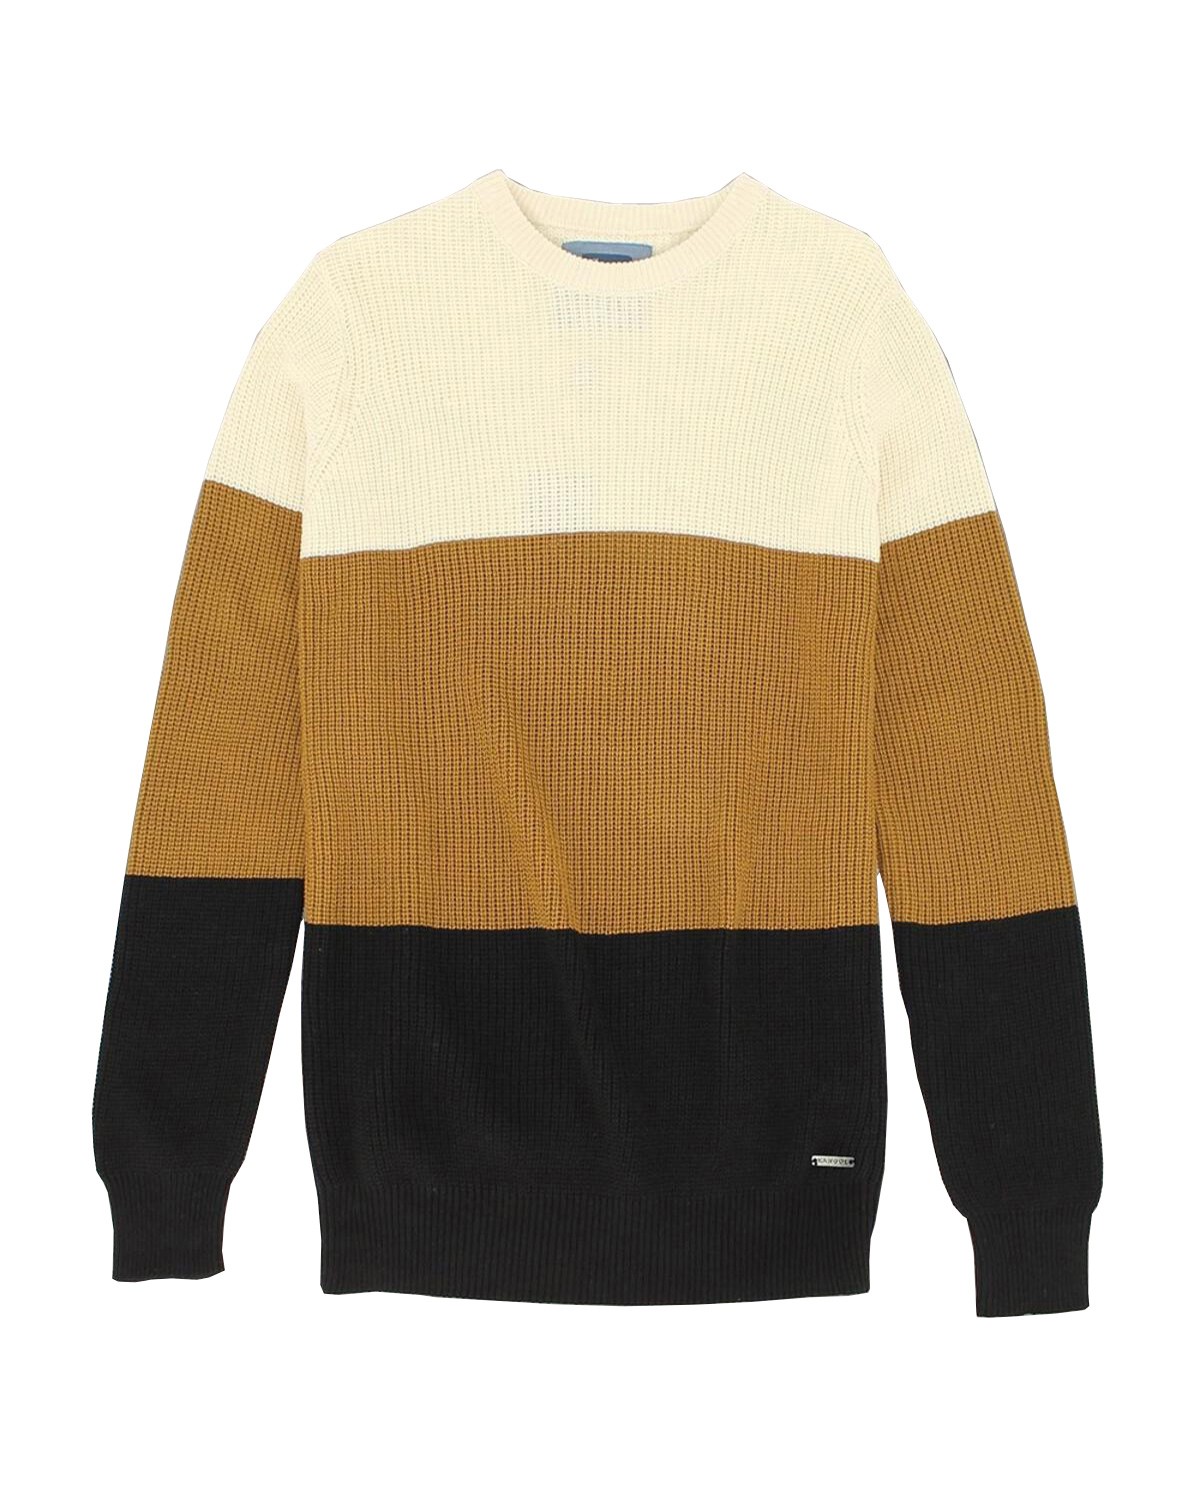 kangol K9852 Men's 7 GG Cotton Acrylic Colorblock Sweater - Free ...